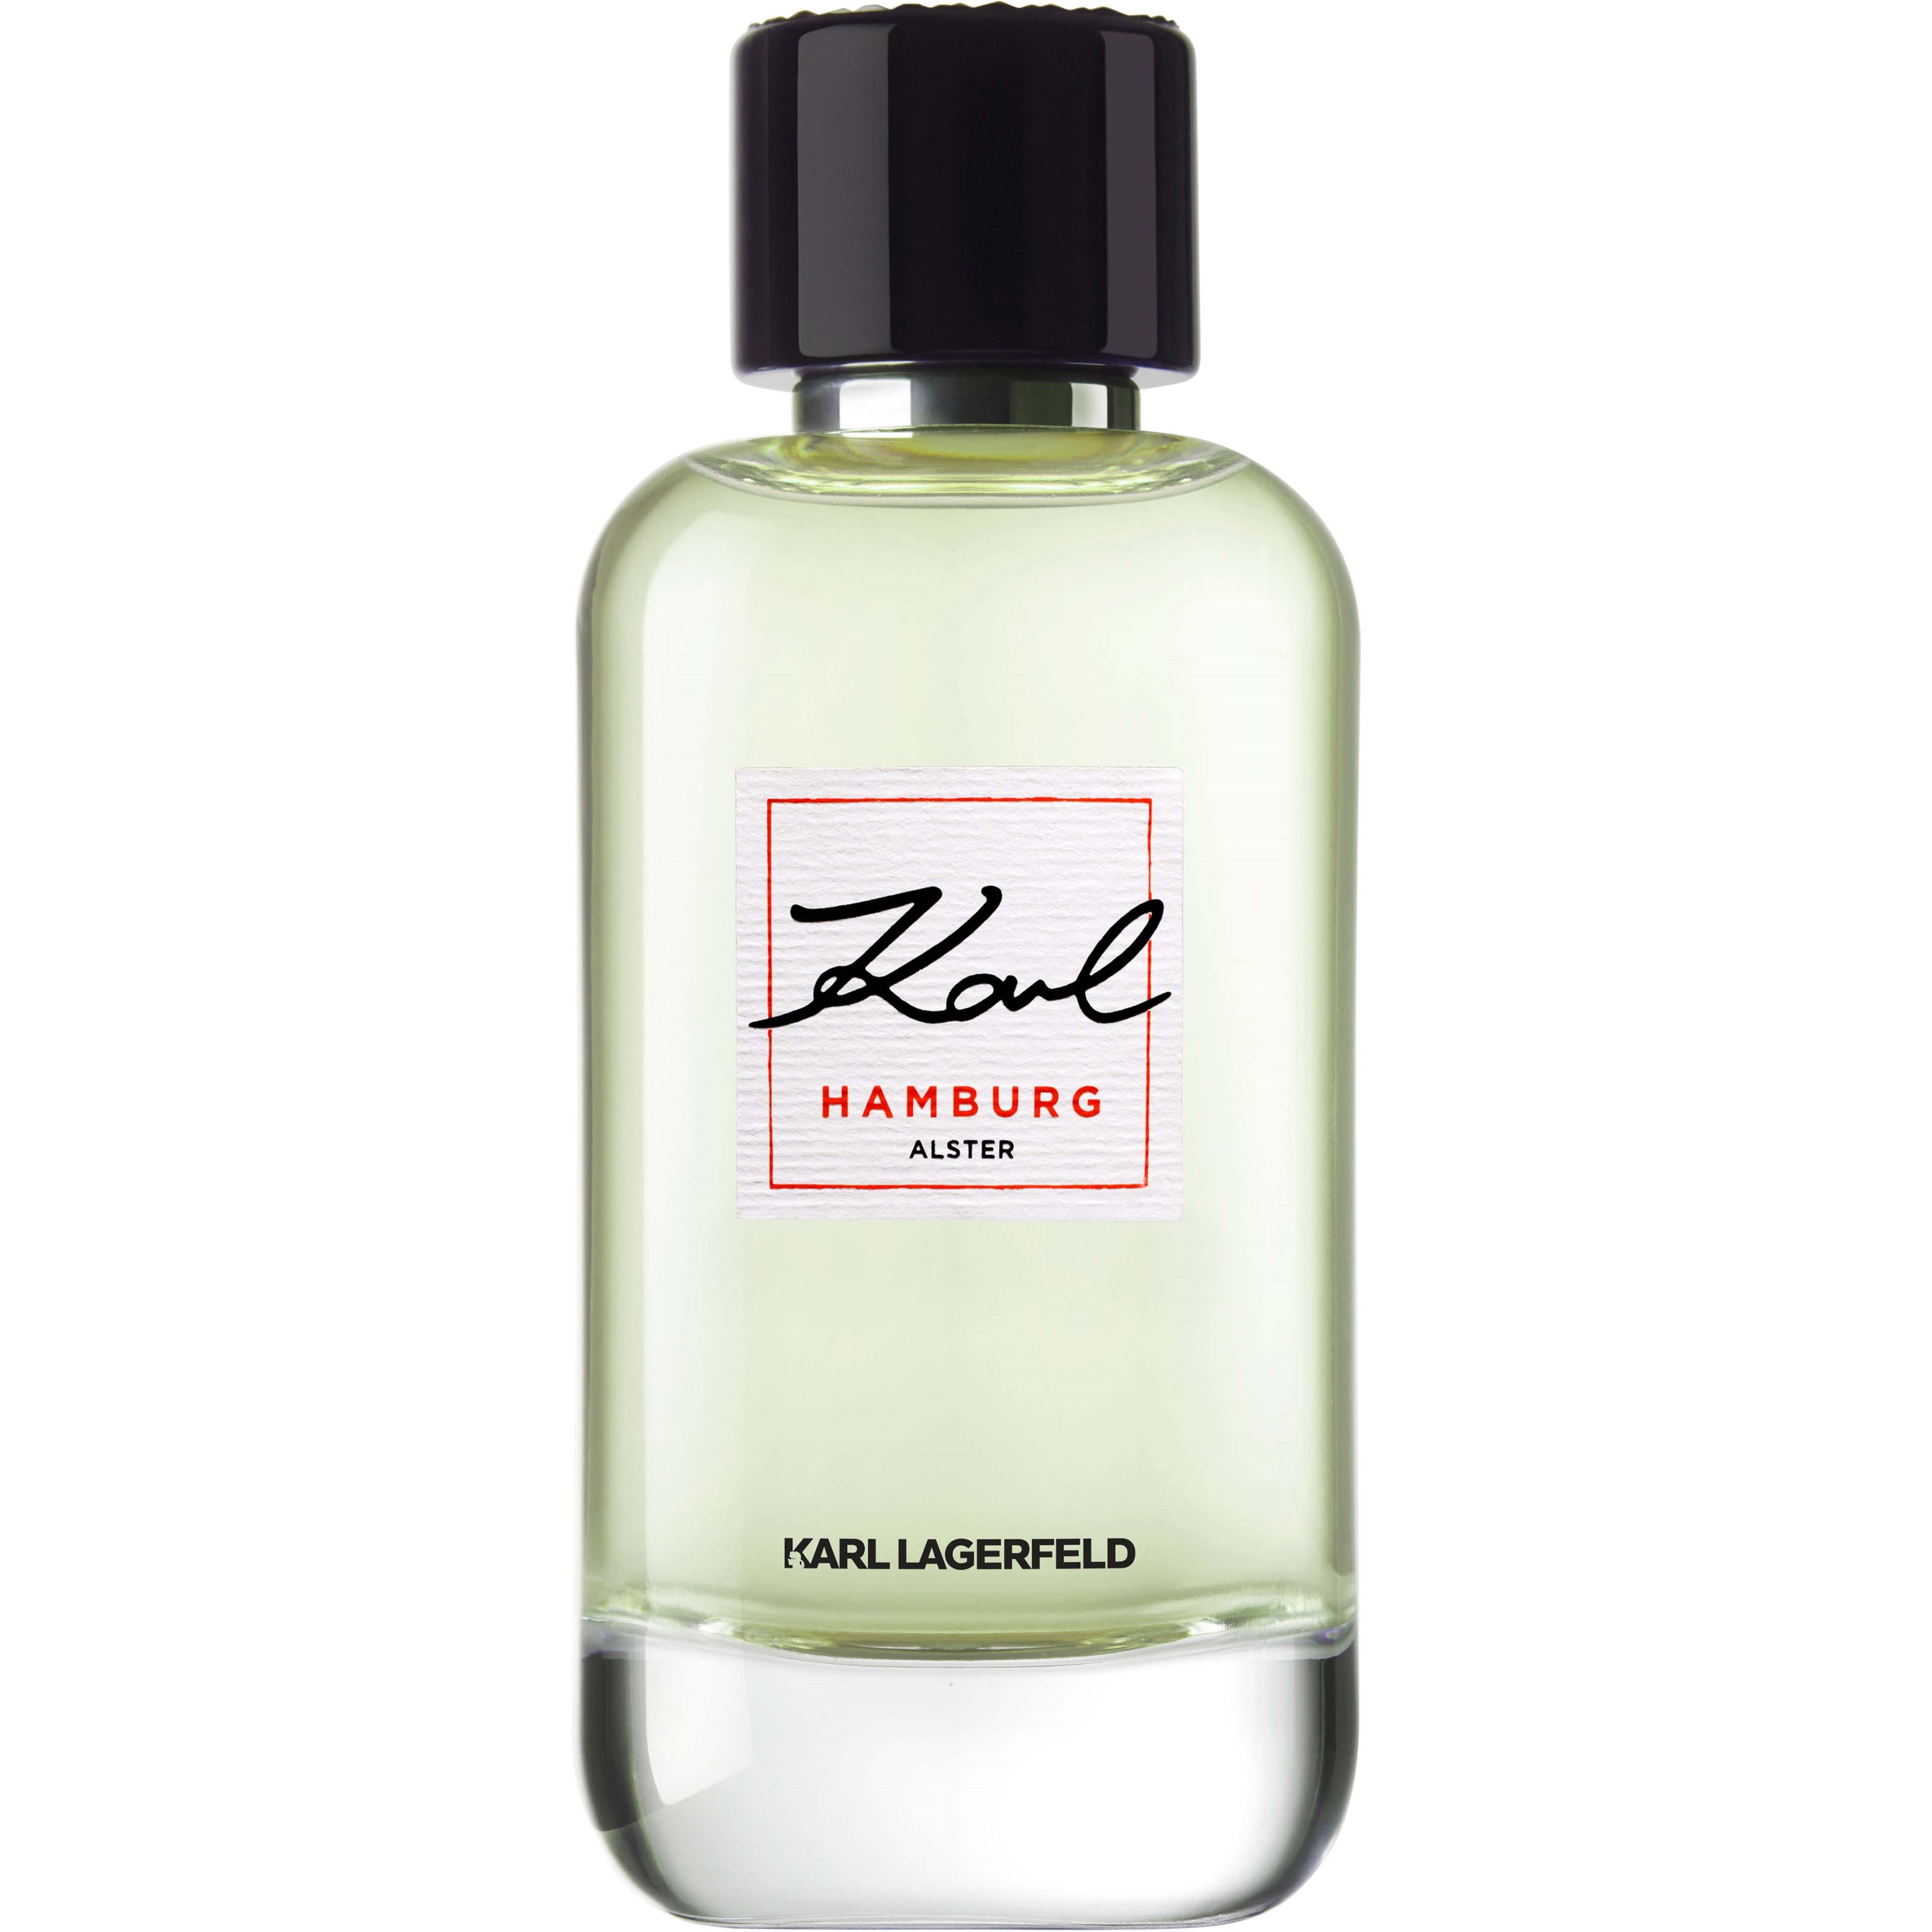 Zdjęcia - Perfuma męska Karl Lagerfeld Hamburg Eau de Toilette 100 ml 